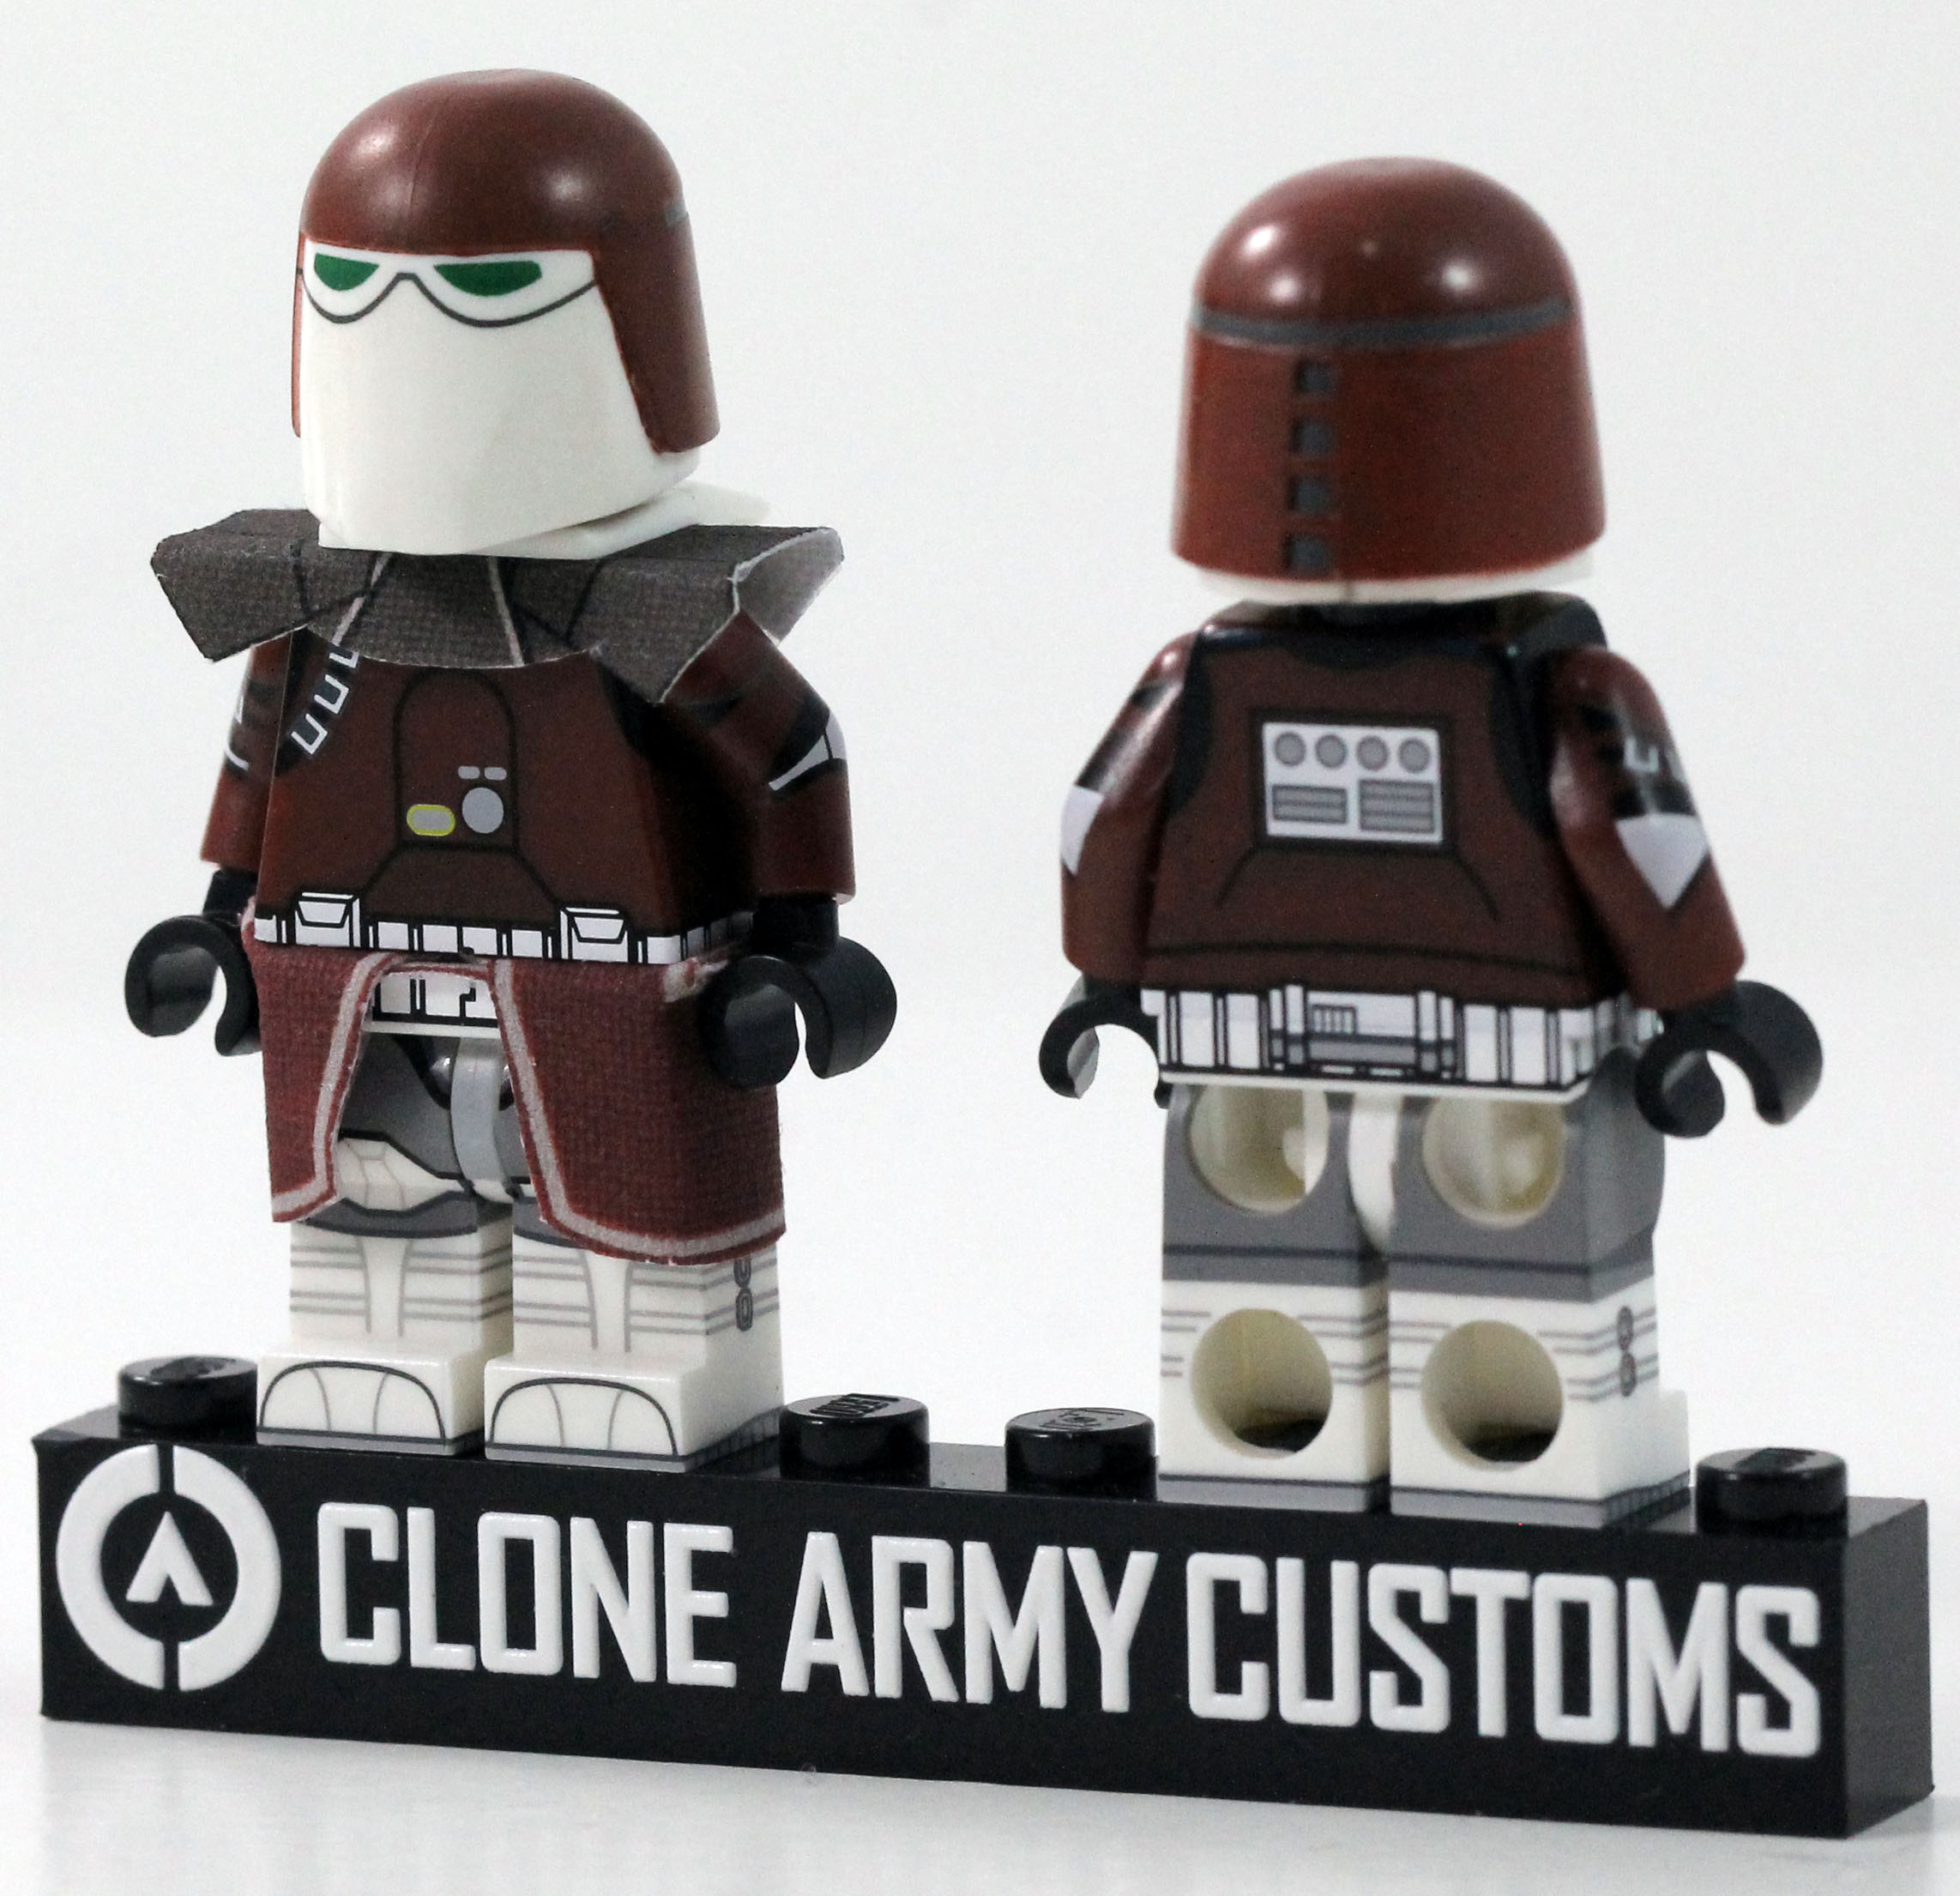 x2 Galactic marines Lego Star Wars minifigures Clone Custom Comdr Bacara 